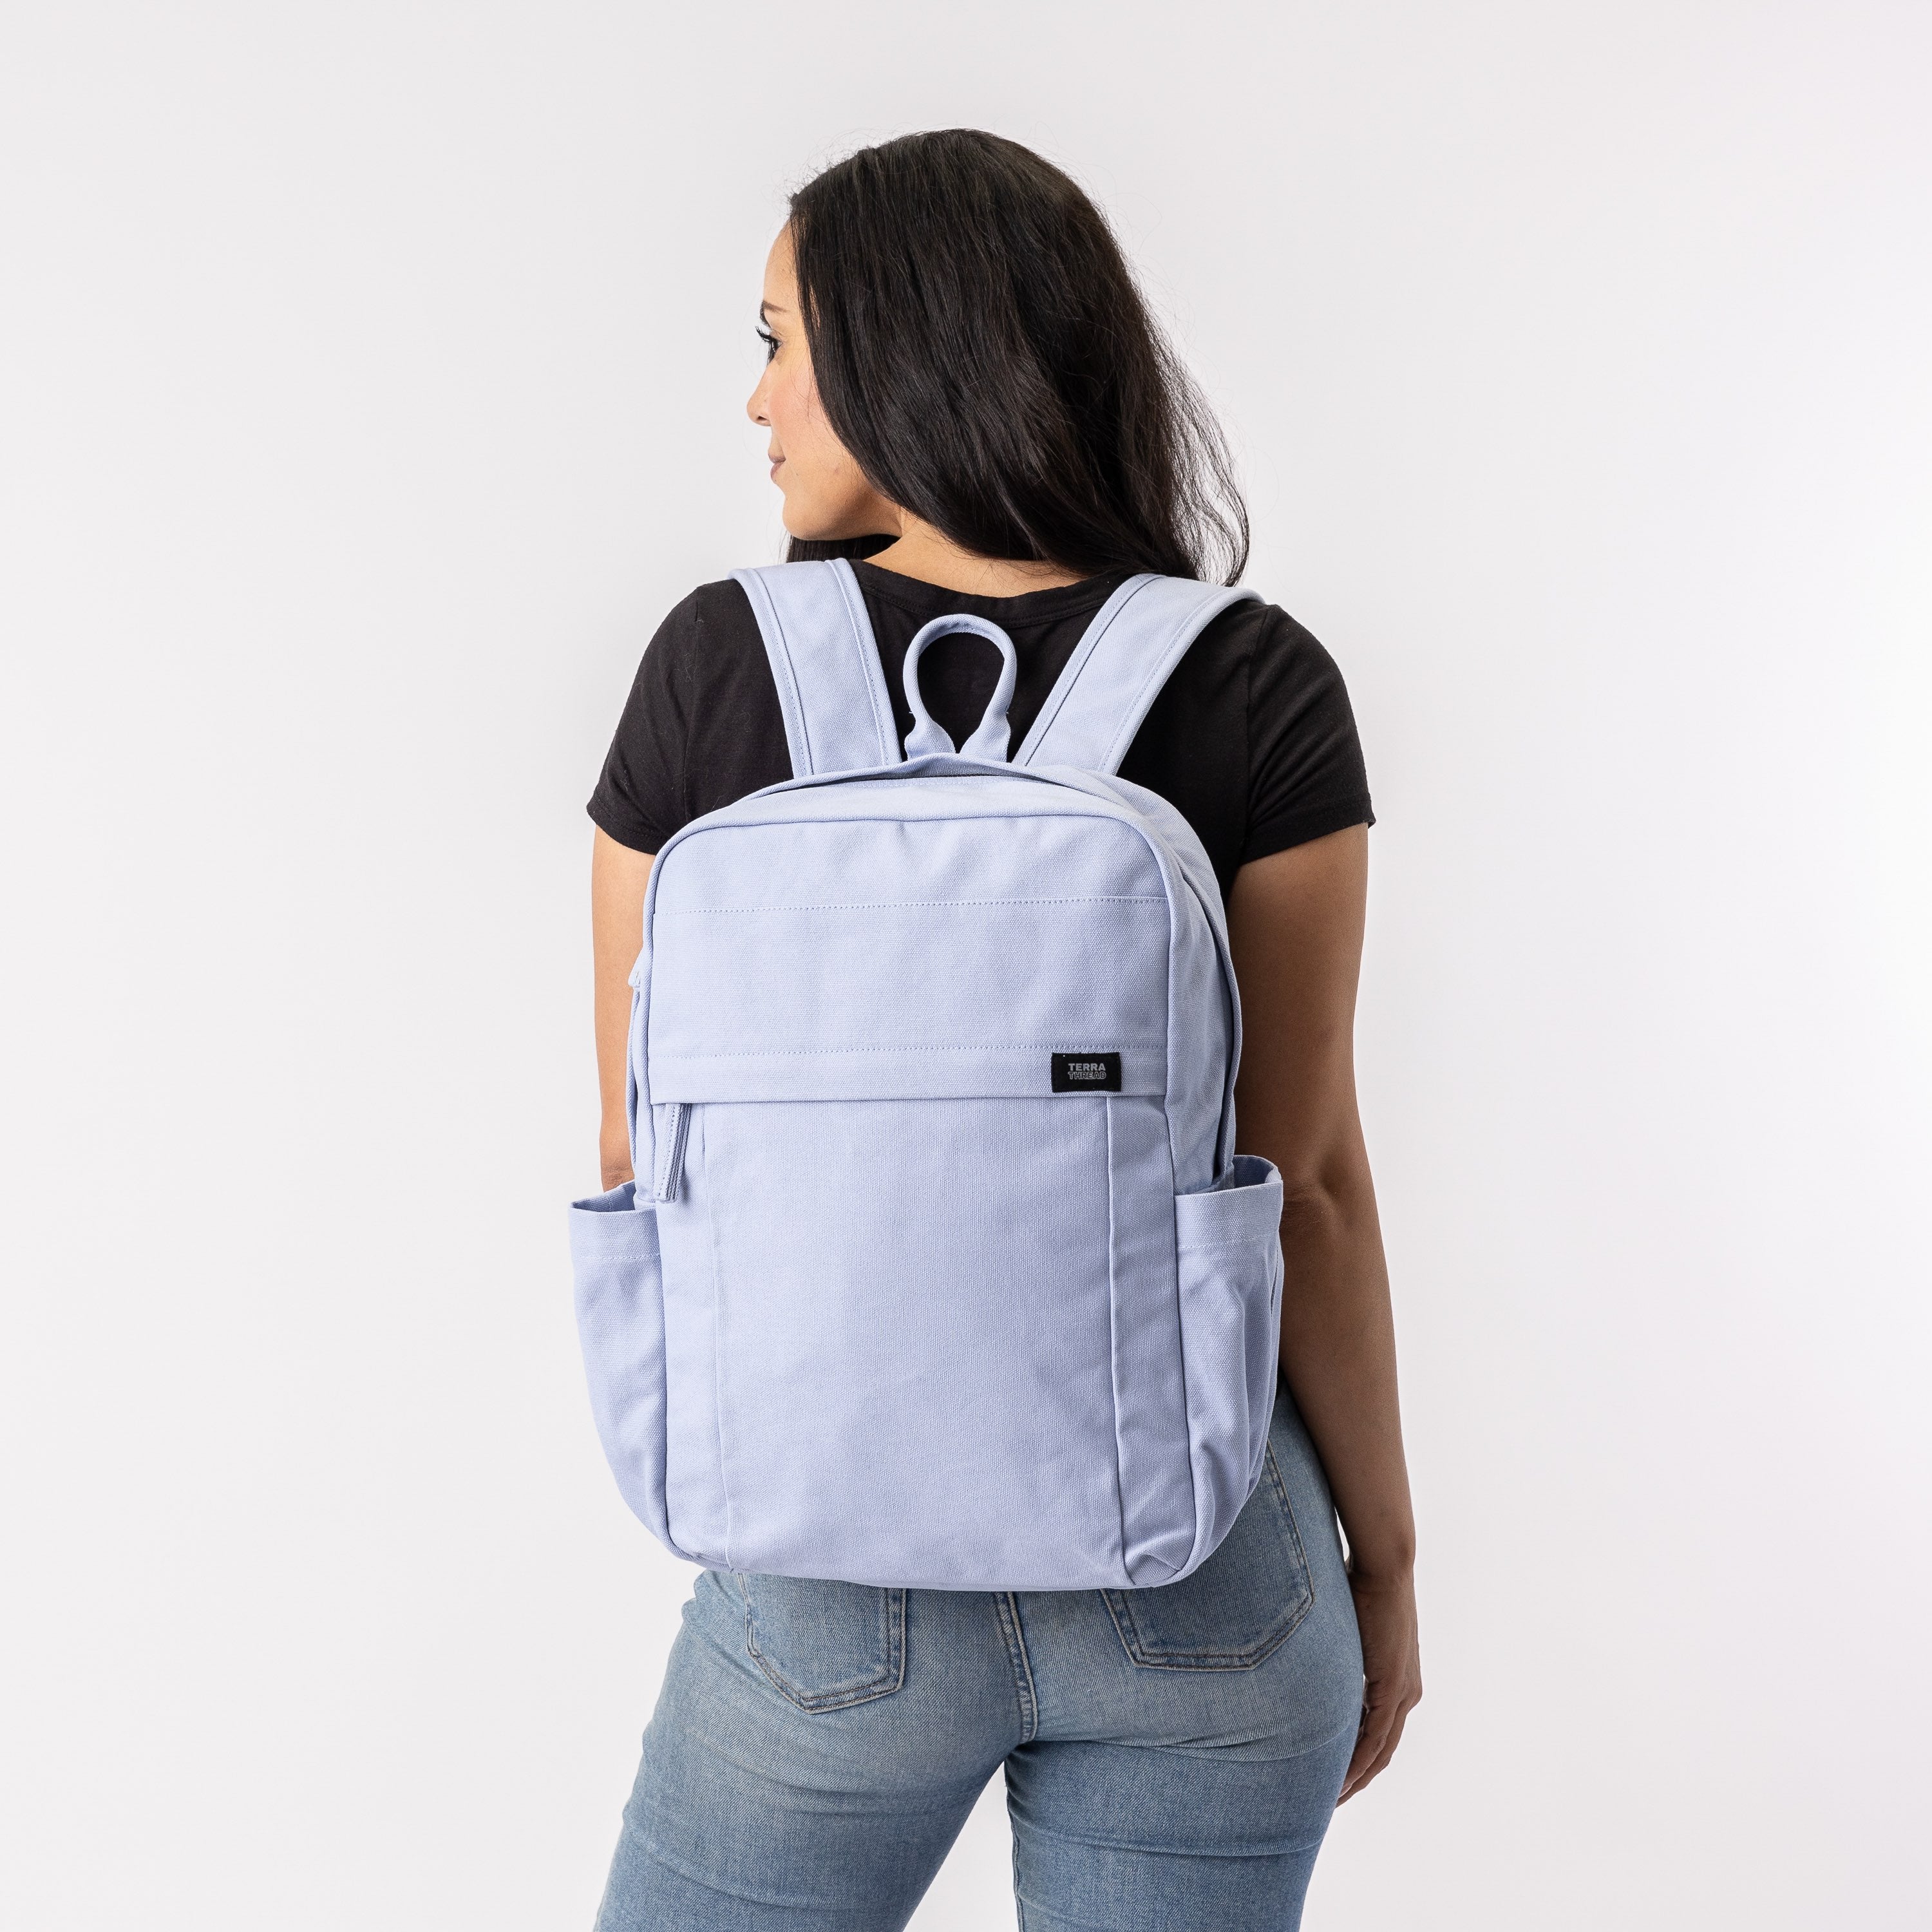 terra thread backpack